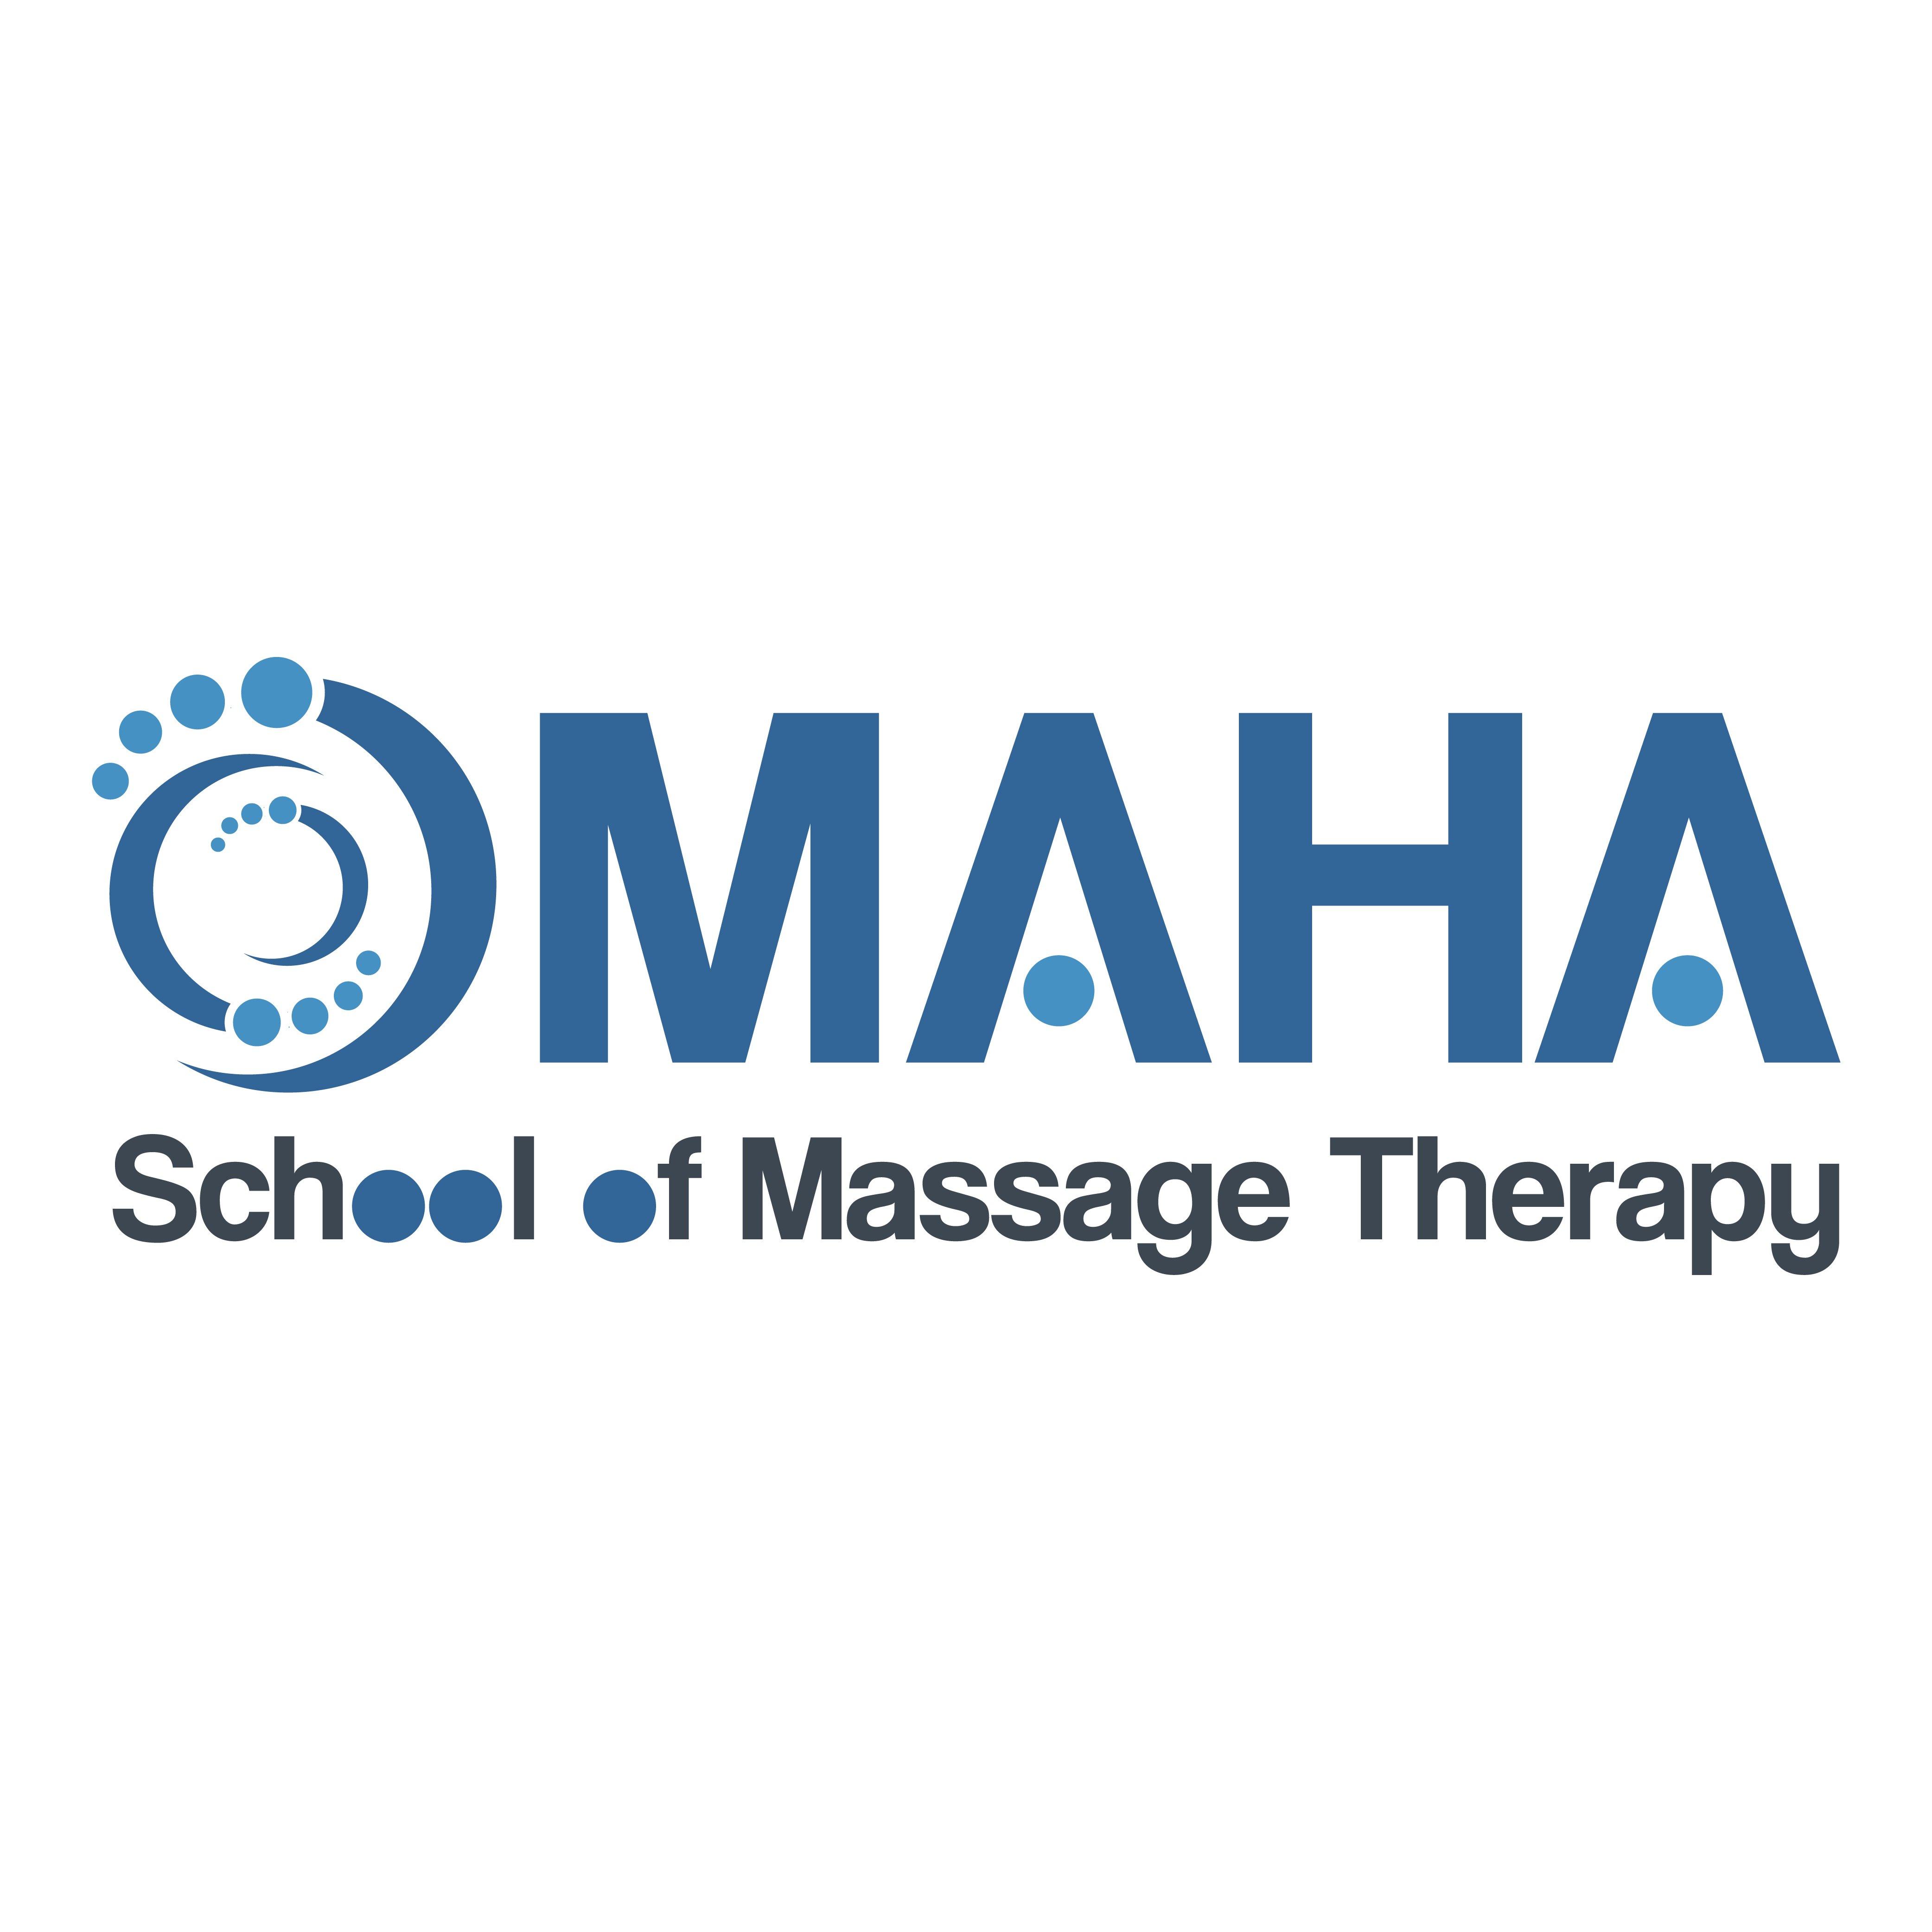 Omaha School of Massage Therapy - Omaha, NE 68127 - (402)331-3694 | ShowMeLocal.com